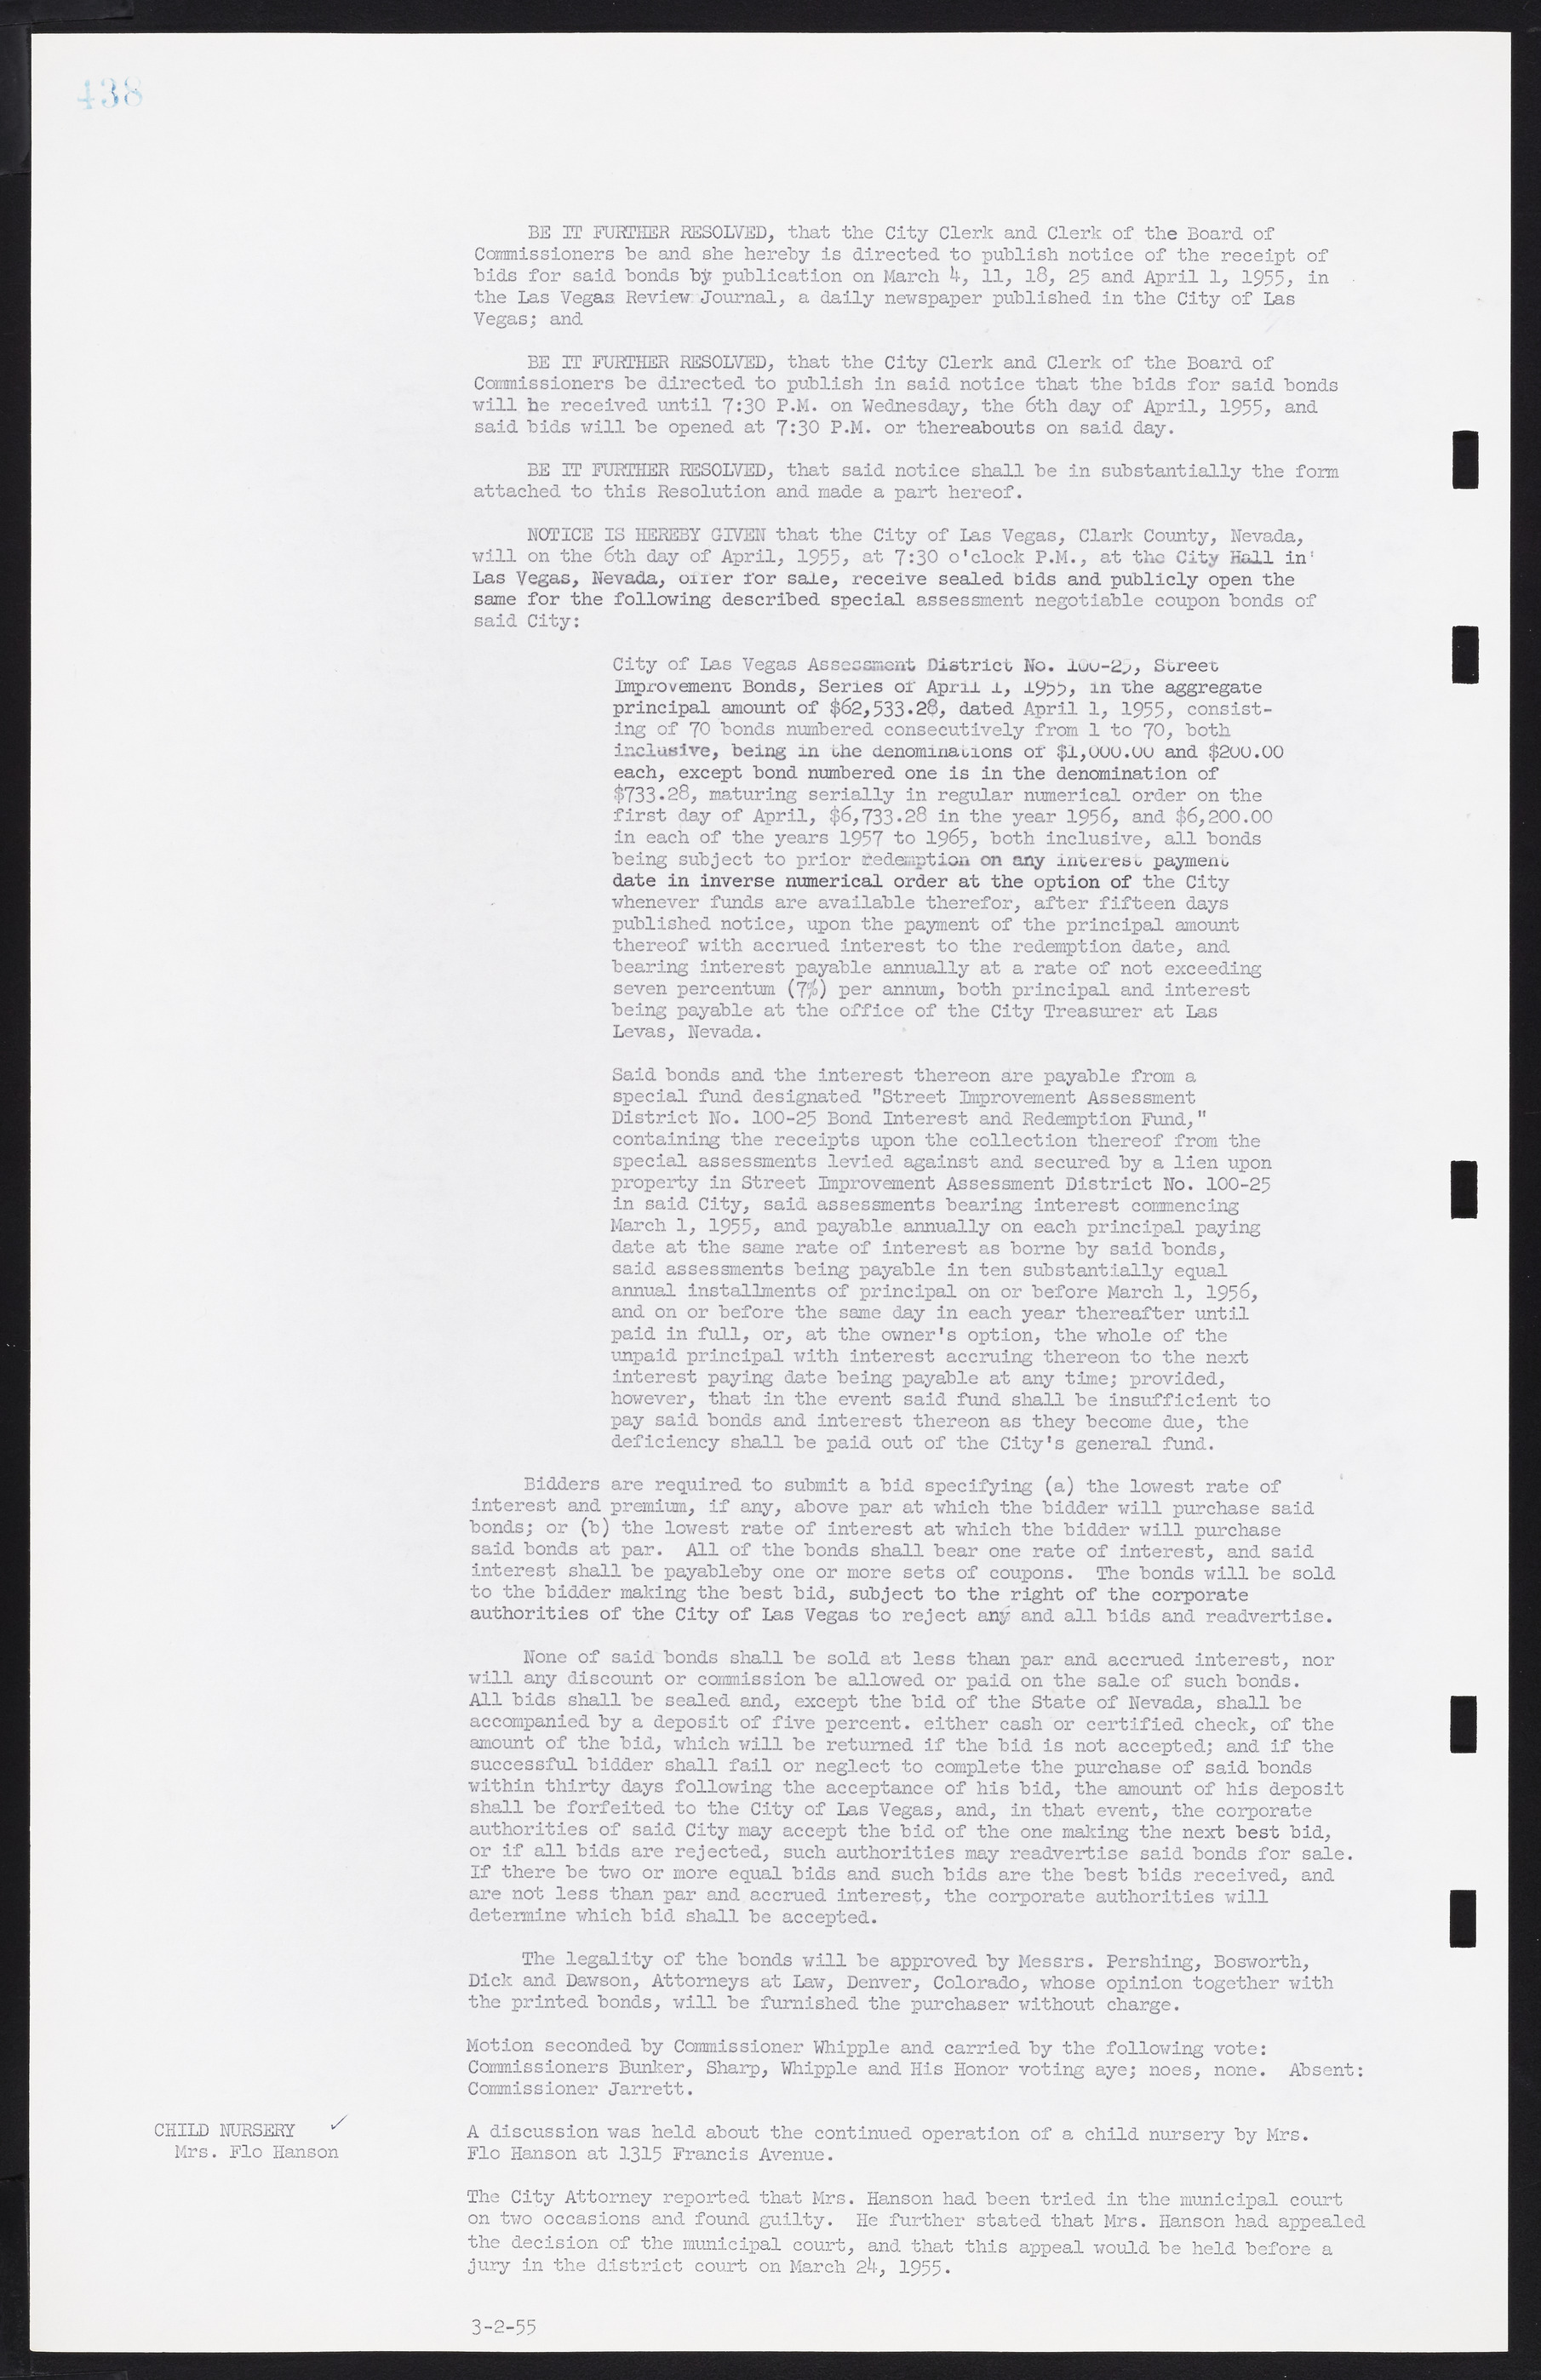 Las Vegas City Commission Minutes, February 17, 1954 to September 21, 1955, lvc000009-444